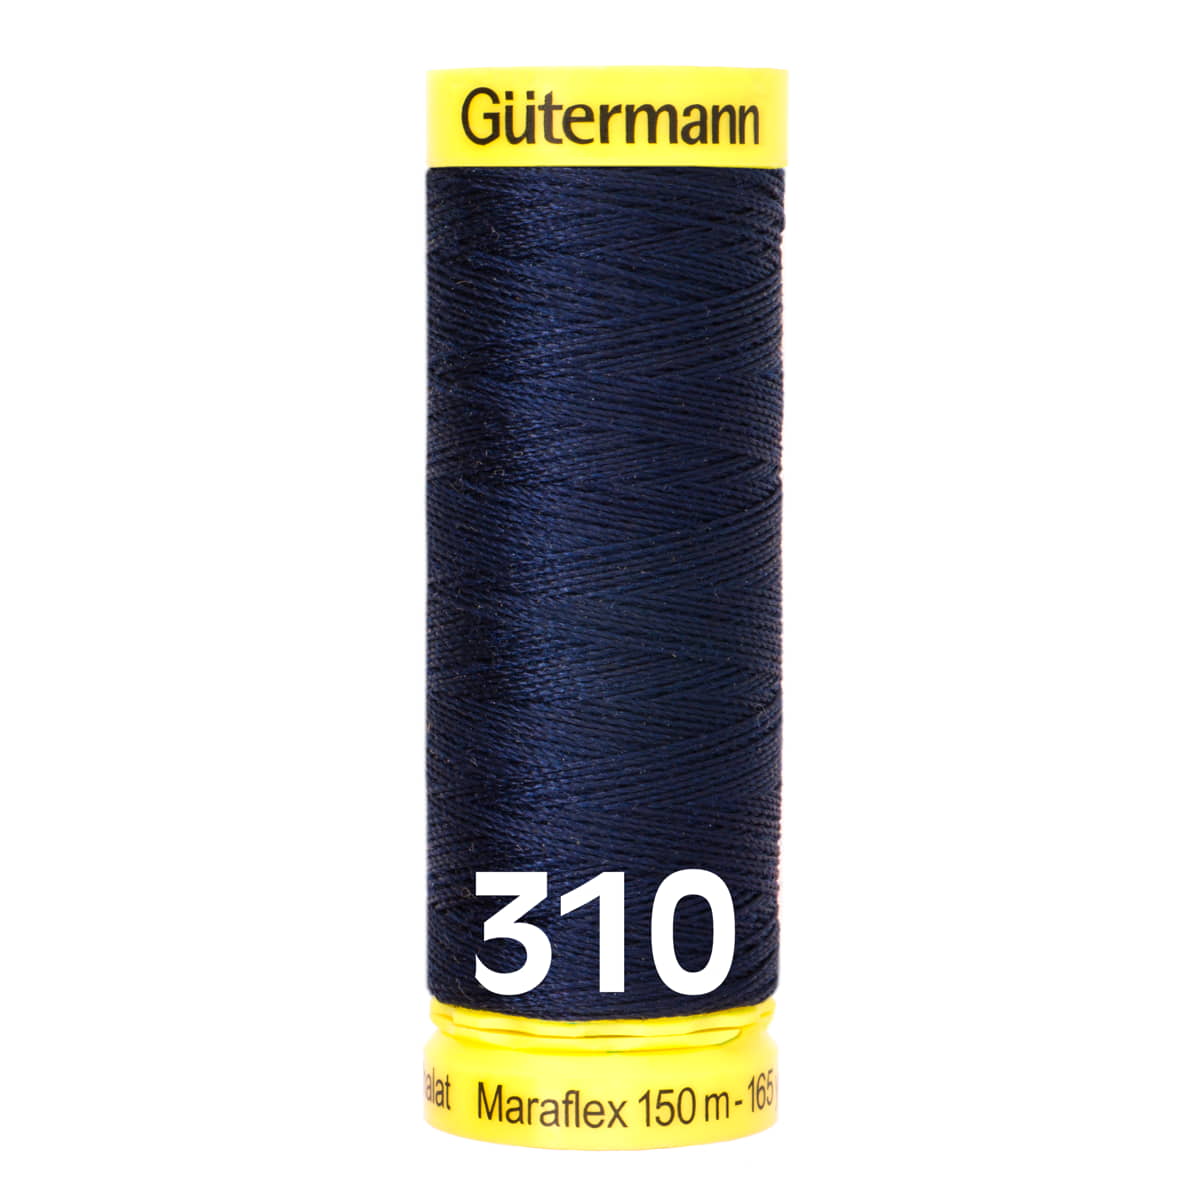 Gütermann MaraFlex 150m - 310 donker blauw GUTERMANN-MARAFLEX-150-310 4029394998911 - Fourniturenkraam.nl